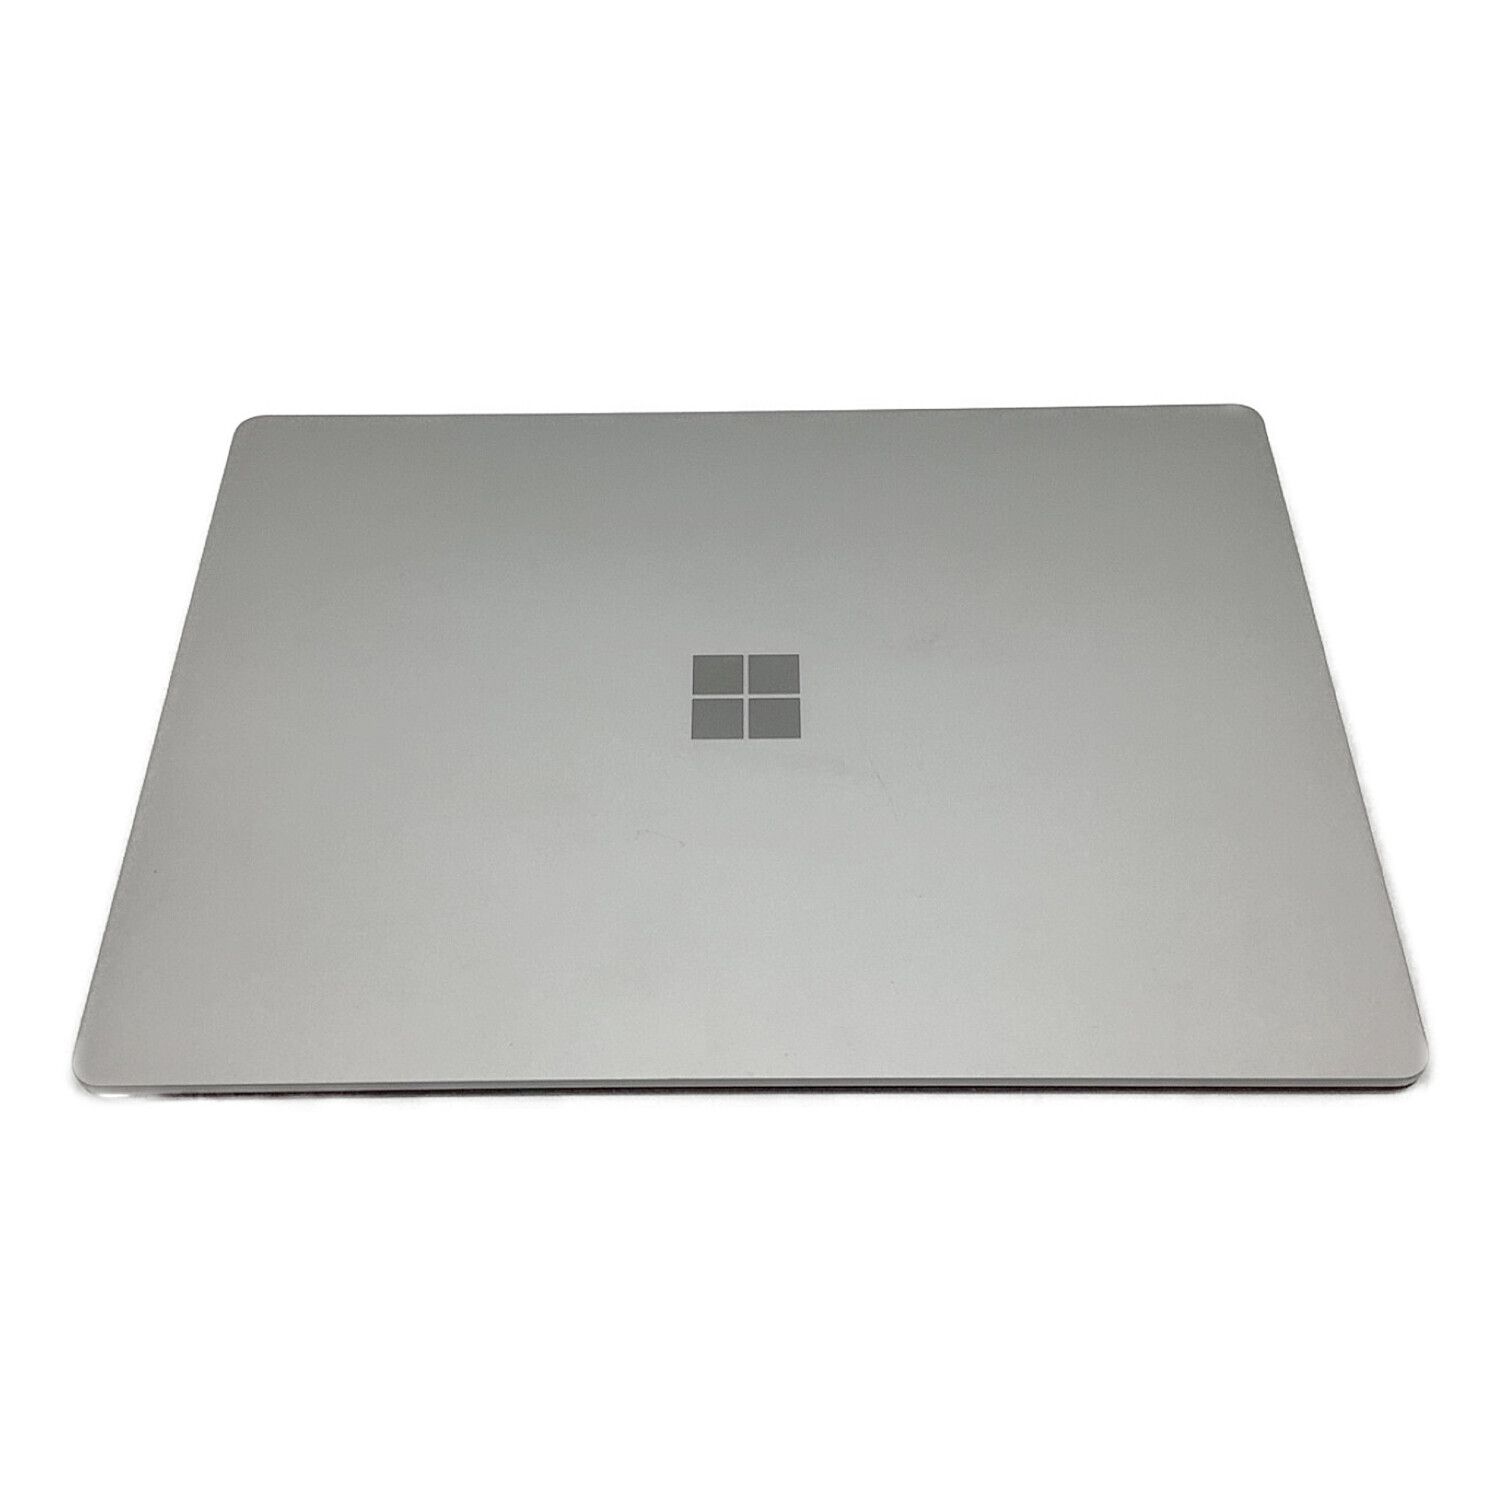 Microsoft (マイクロソフト) Surface Laptop 1769 Core i5 メモリ:8GB ...